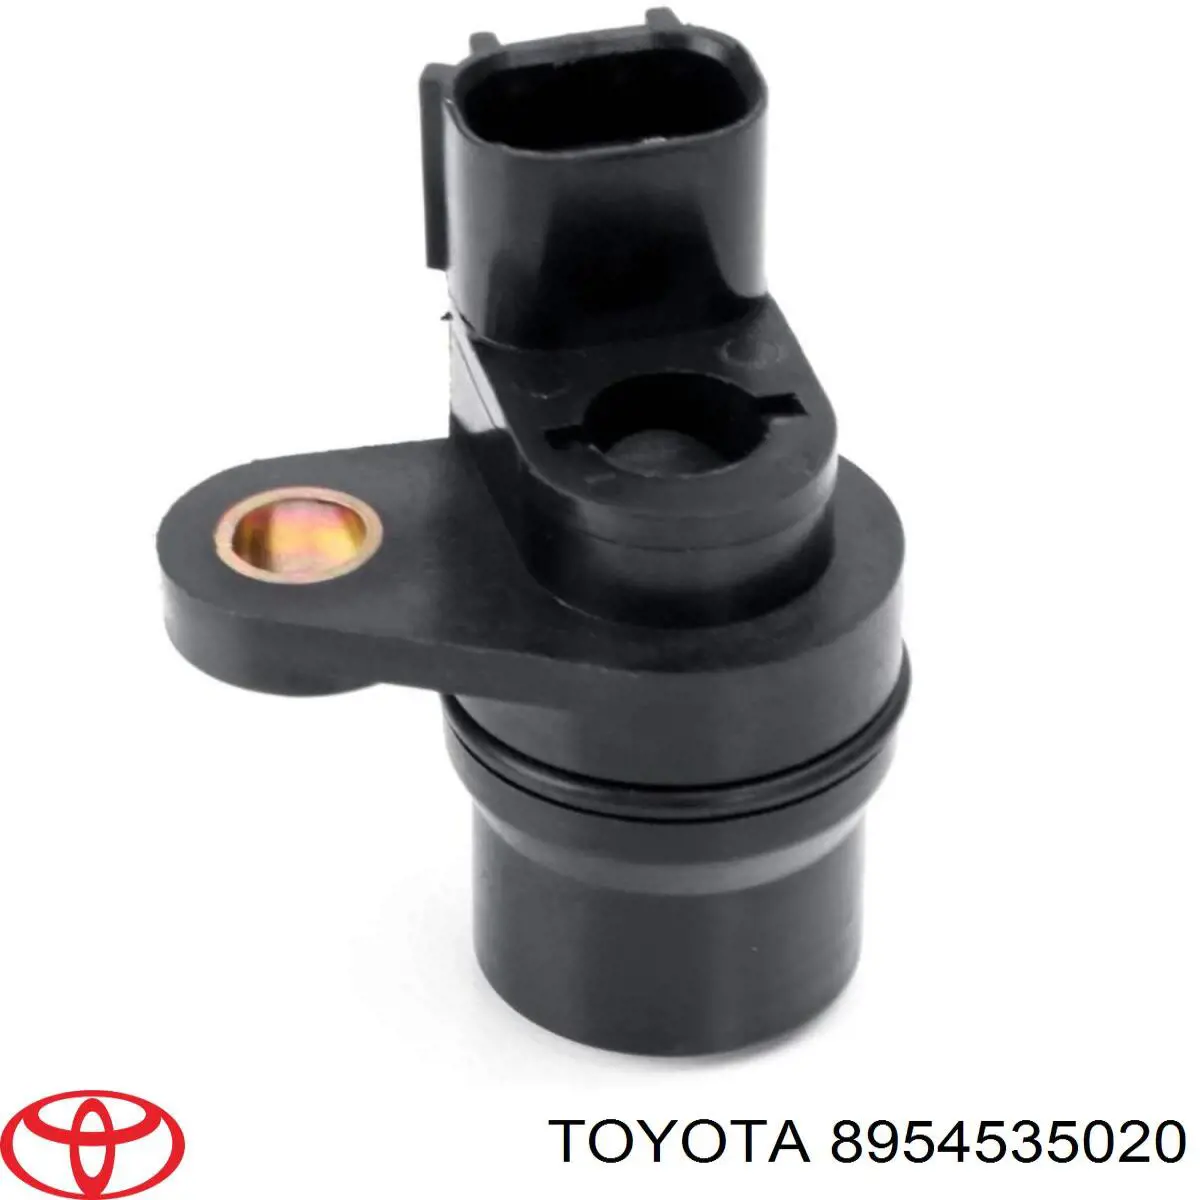 Sensor de freno, trasero derecho para Toyota Hilux (KUN25)